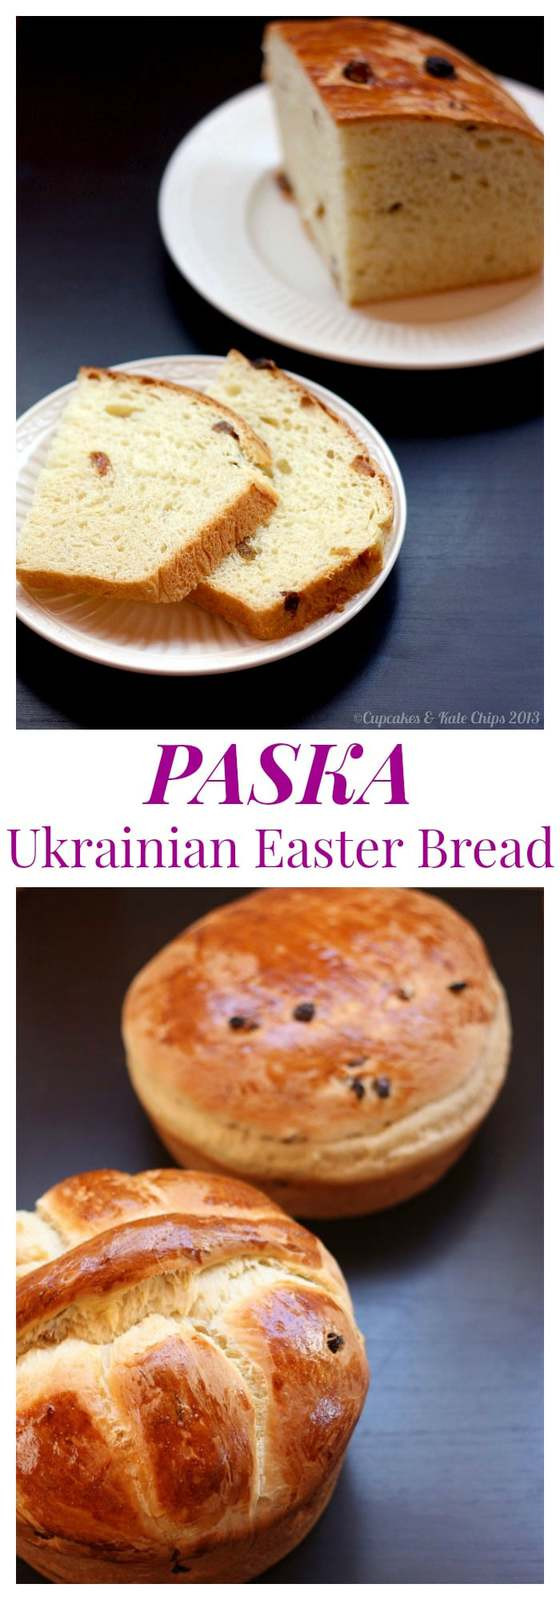 Ukrainian Easter Bread Recipes
 Paska Ukranian Easter Bread Cupcakes & Kale Chips